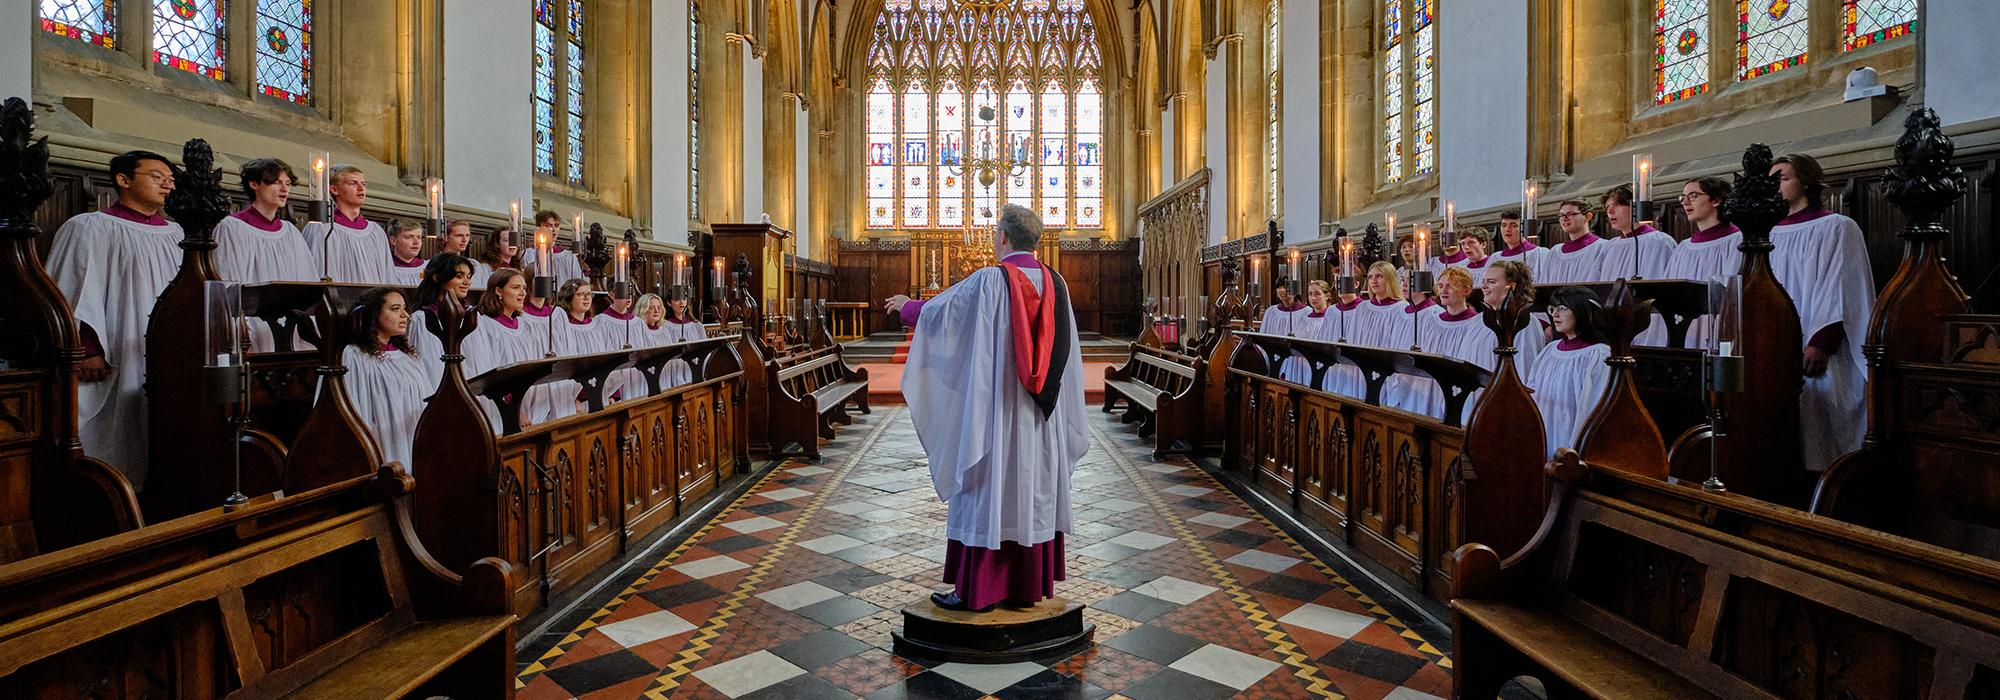 The Choir of Merton College, Oxford, in 2021 - Photo: © Hugh Warwick - www.hughwarwick.com